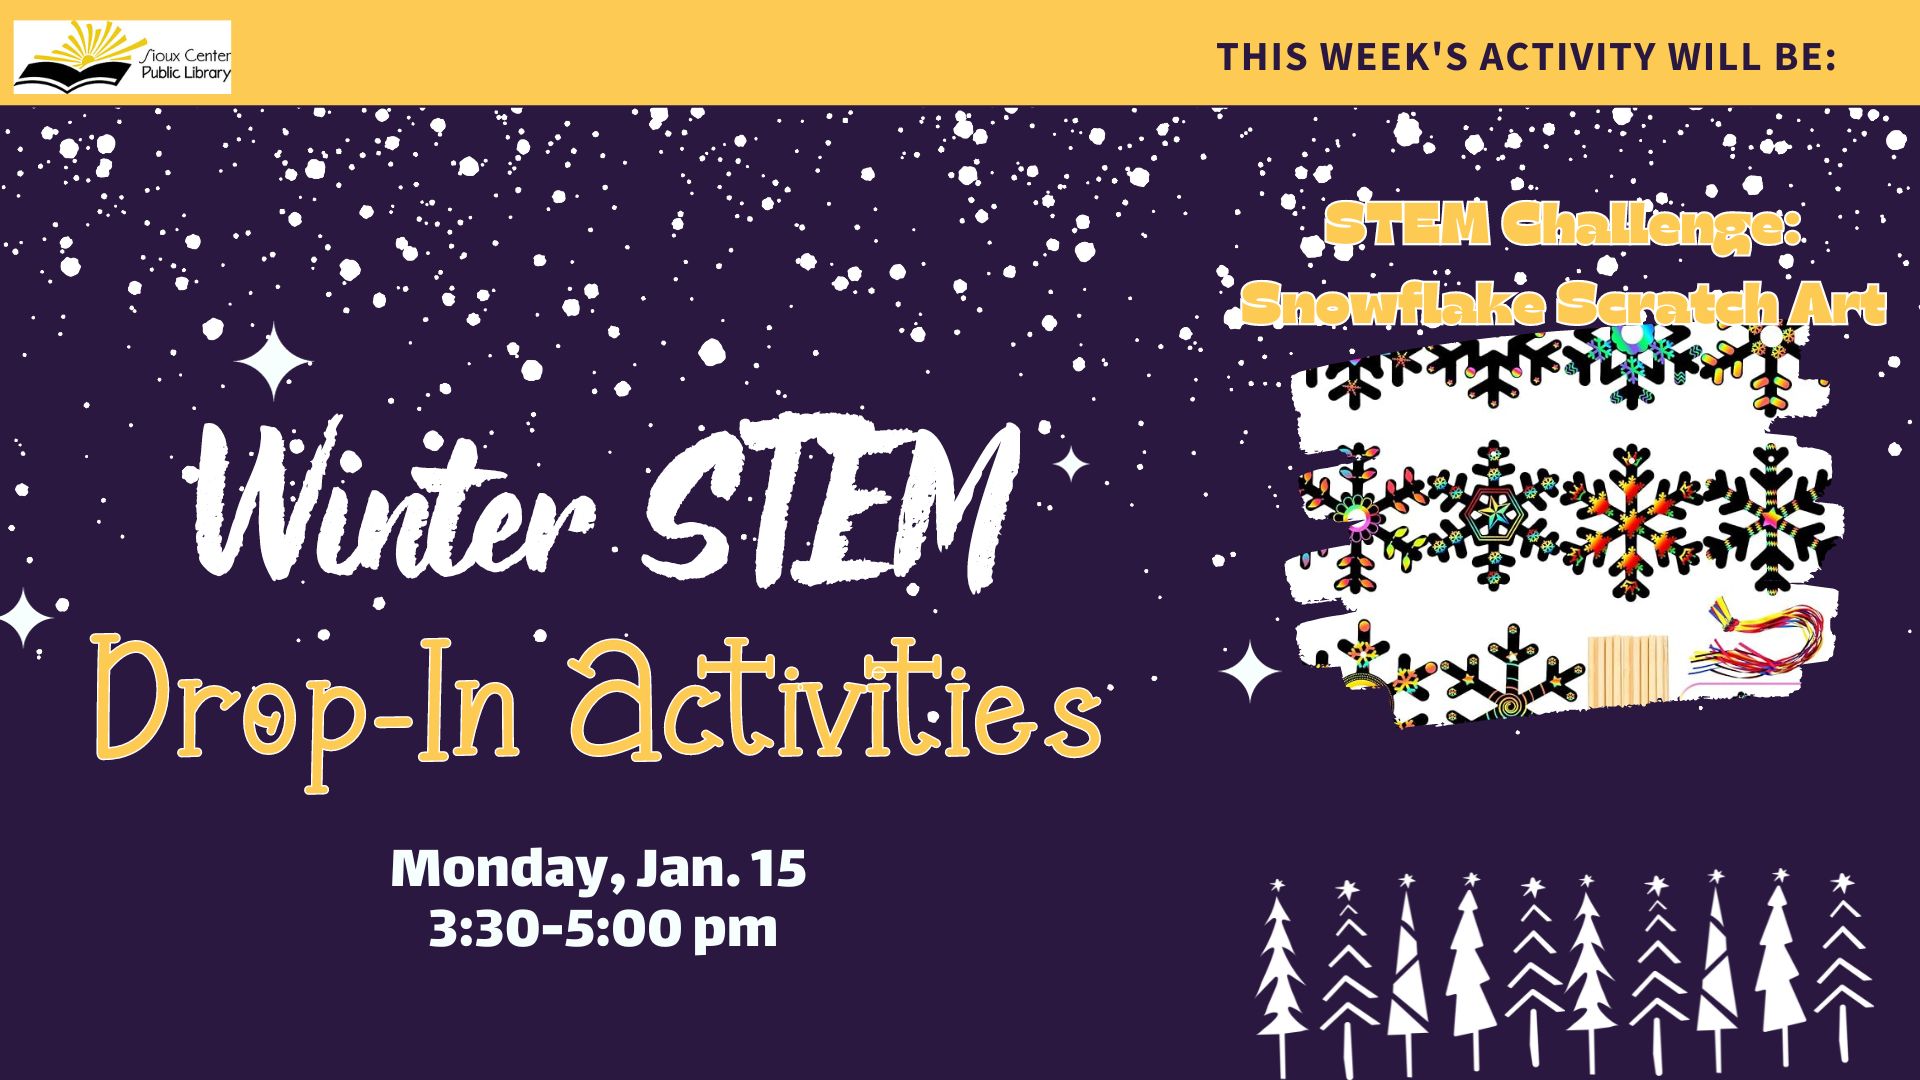 STEM Challenge: Snowflake Scratch Art